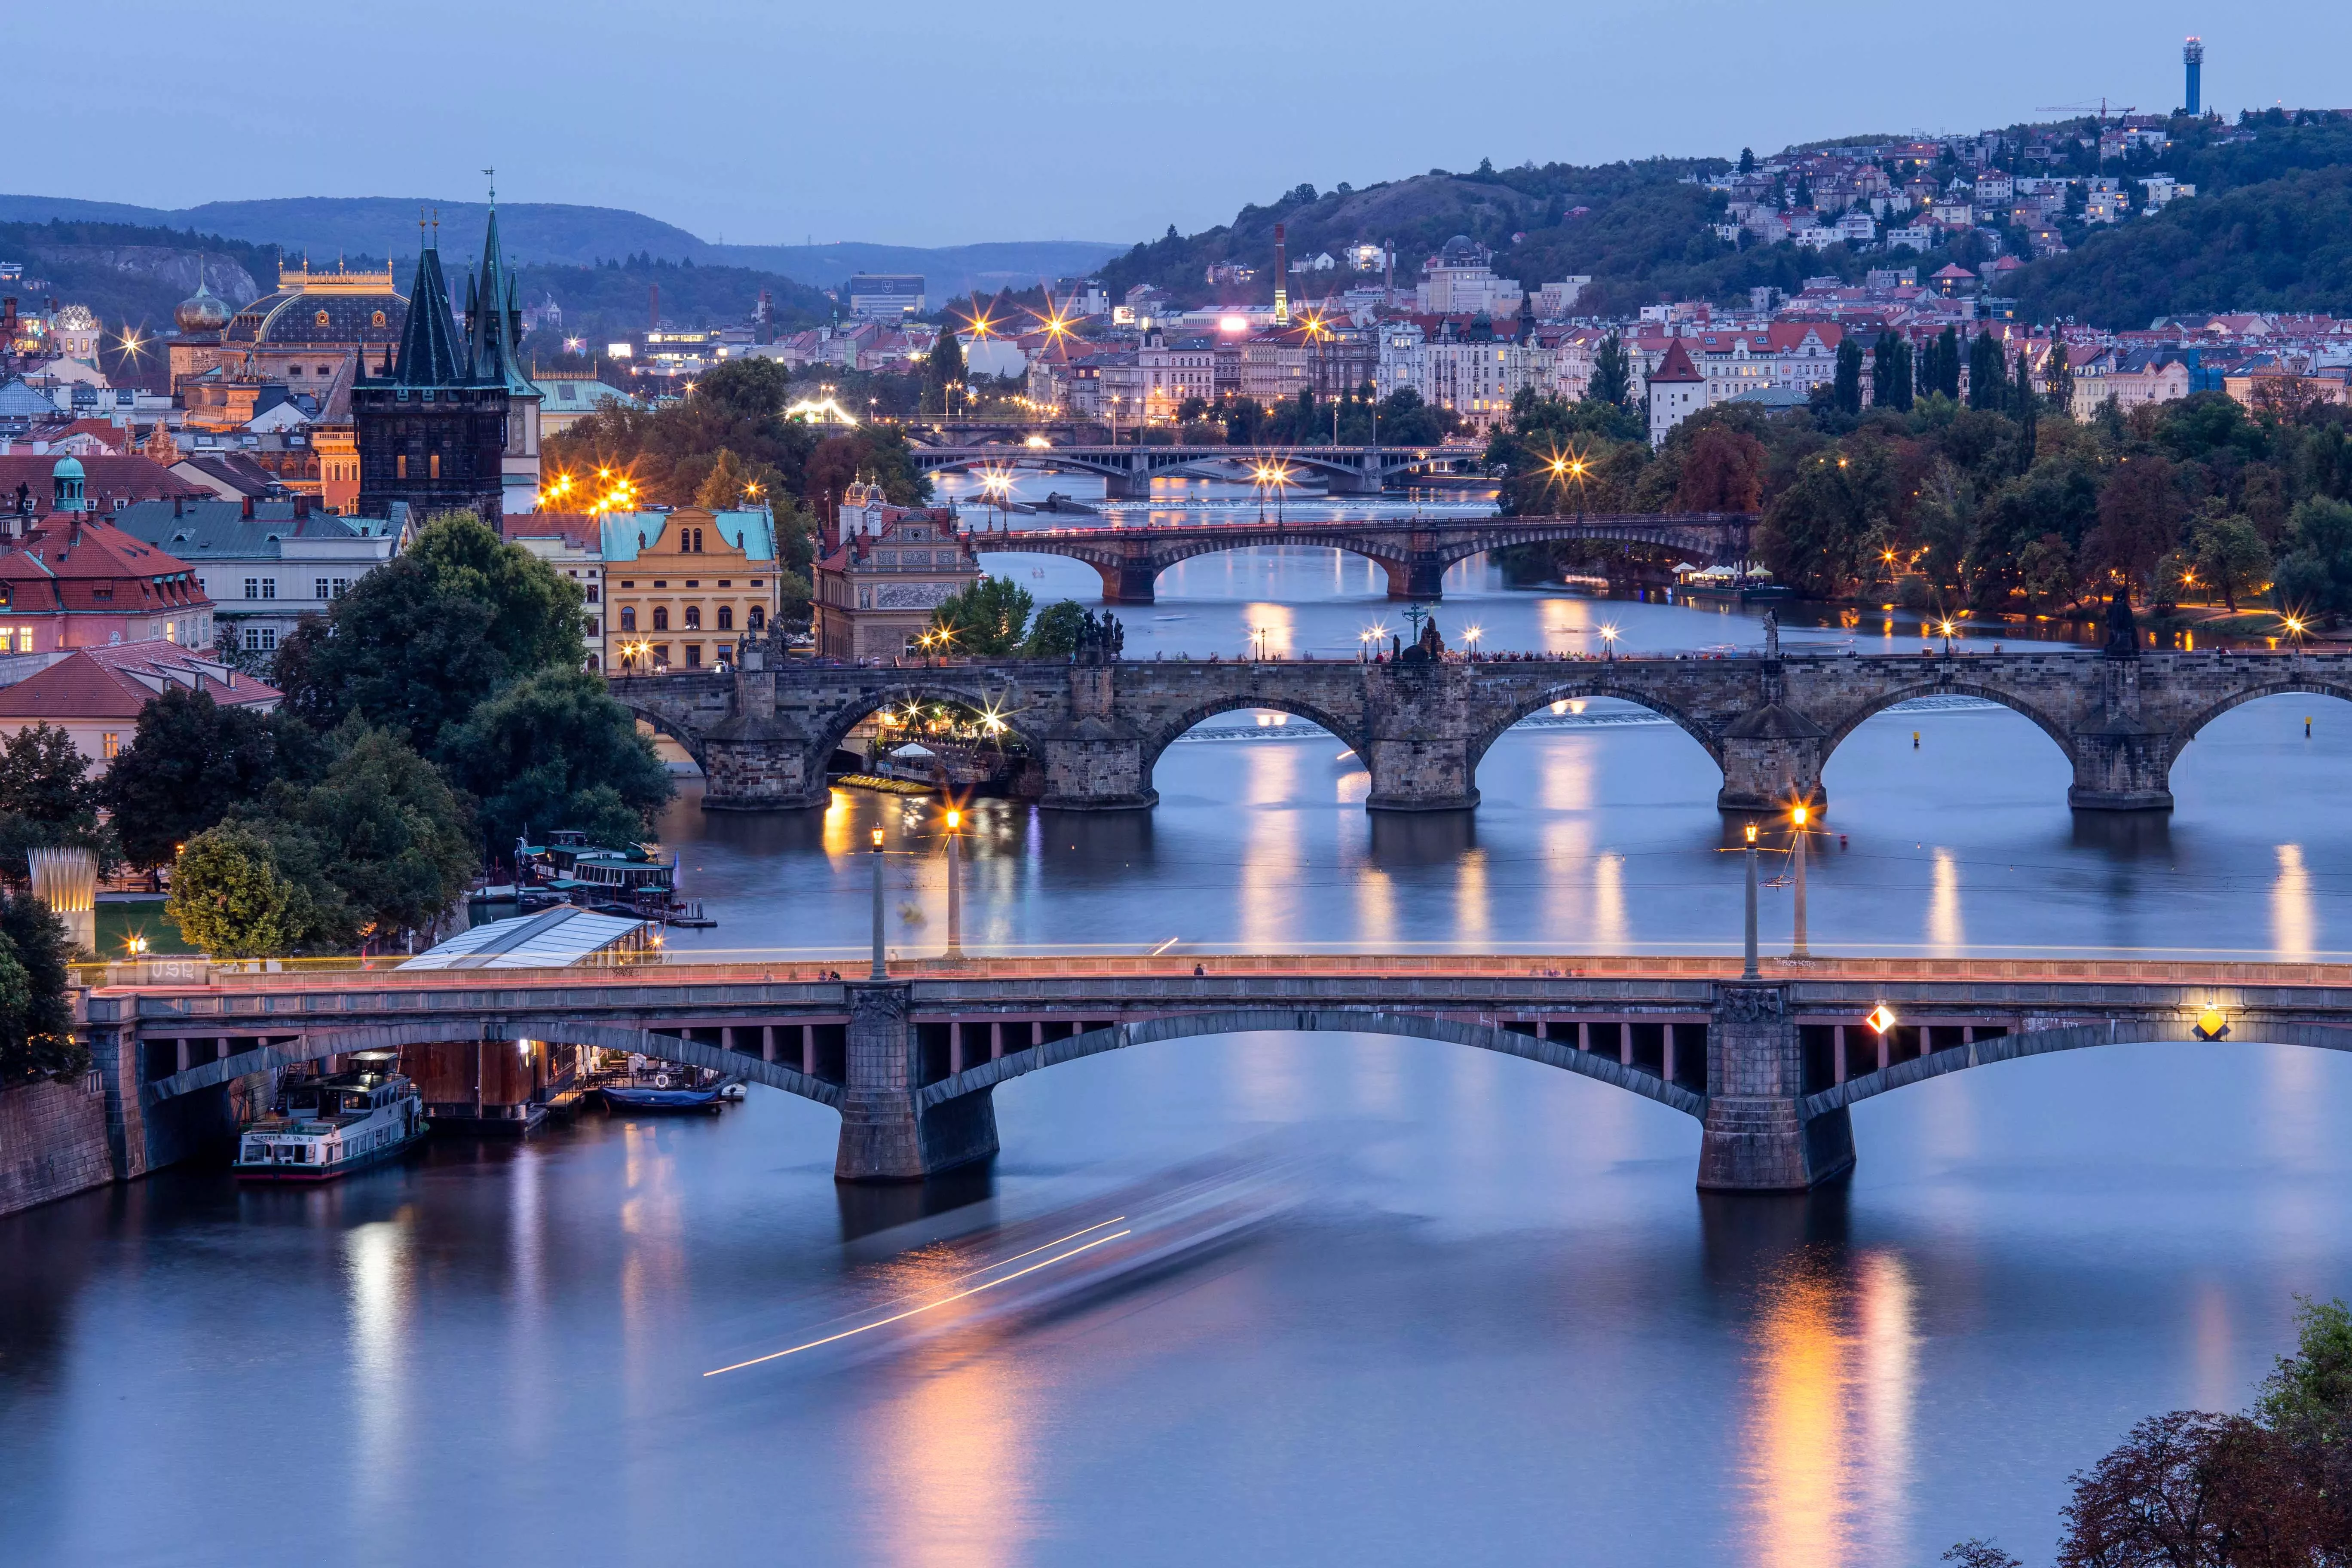 Nighttime view of Charles Bridge in Prague.